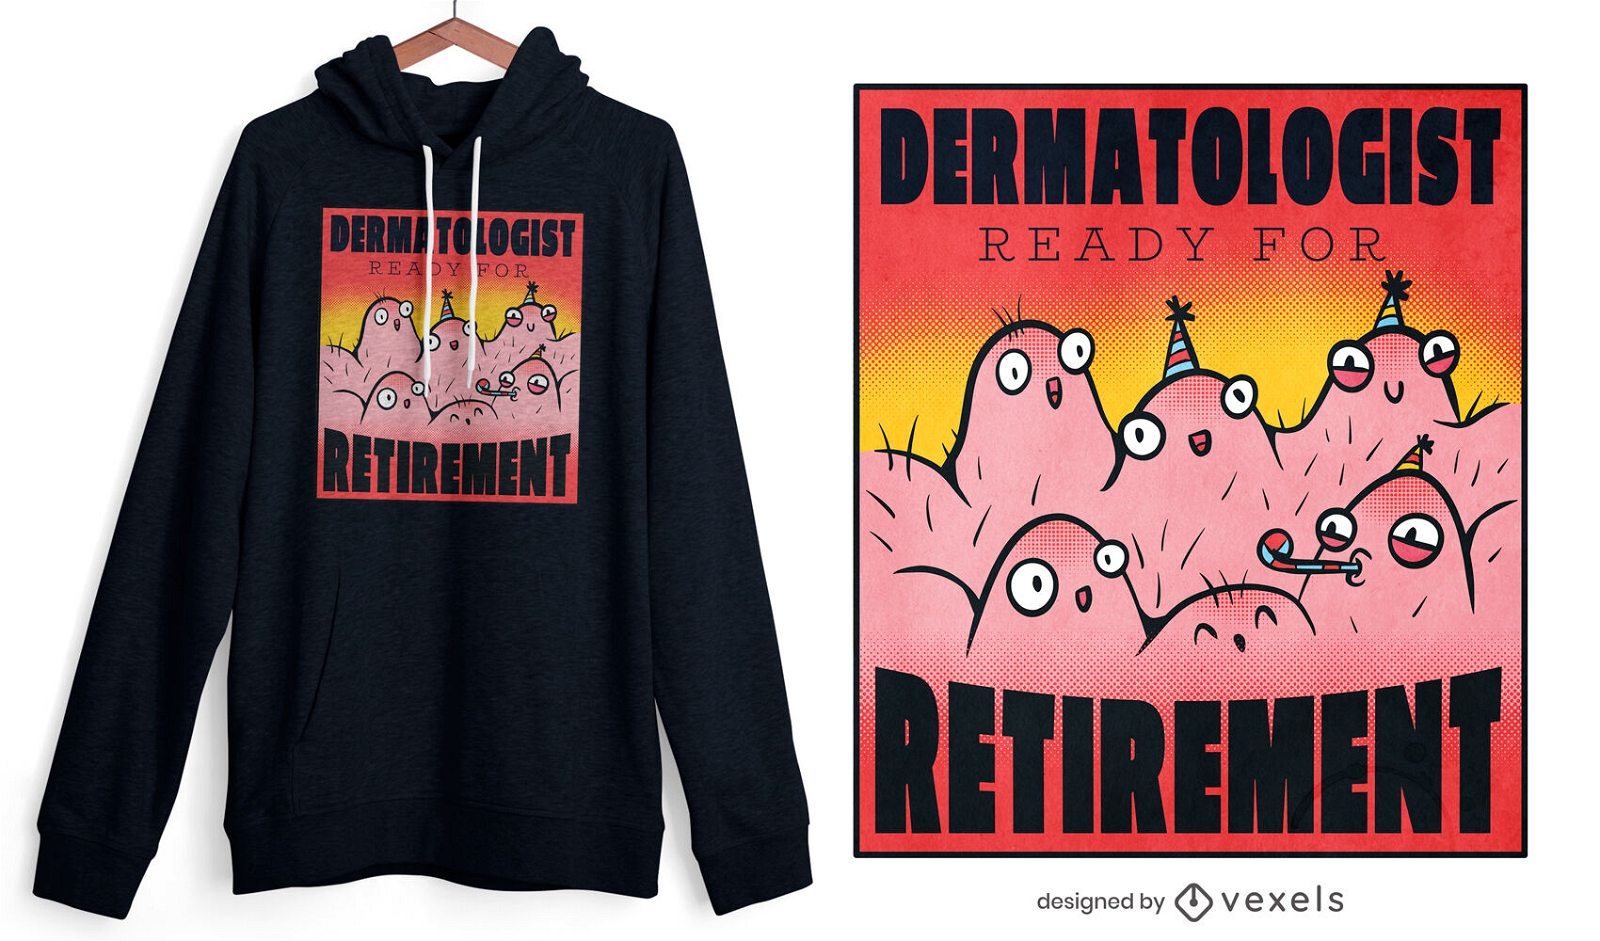 Dermatologist ready for retirement t-shirt design